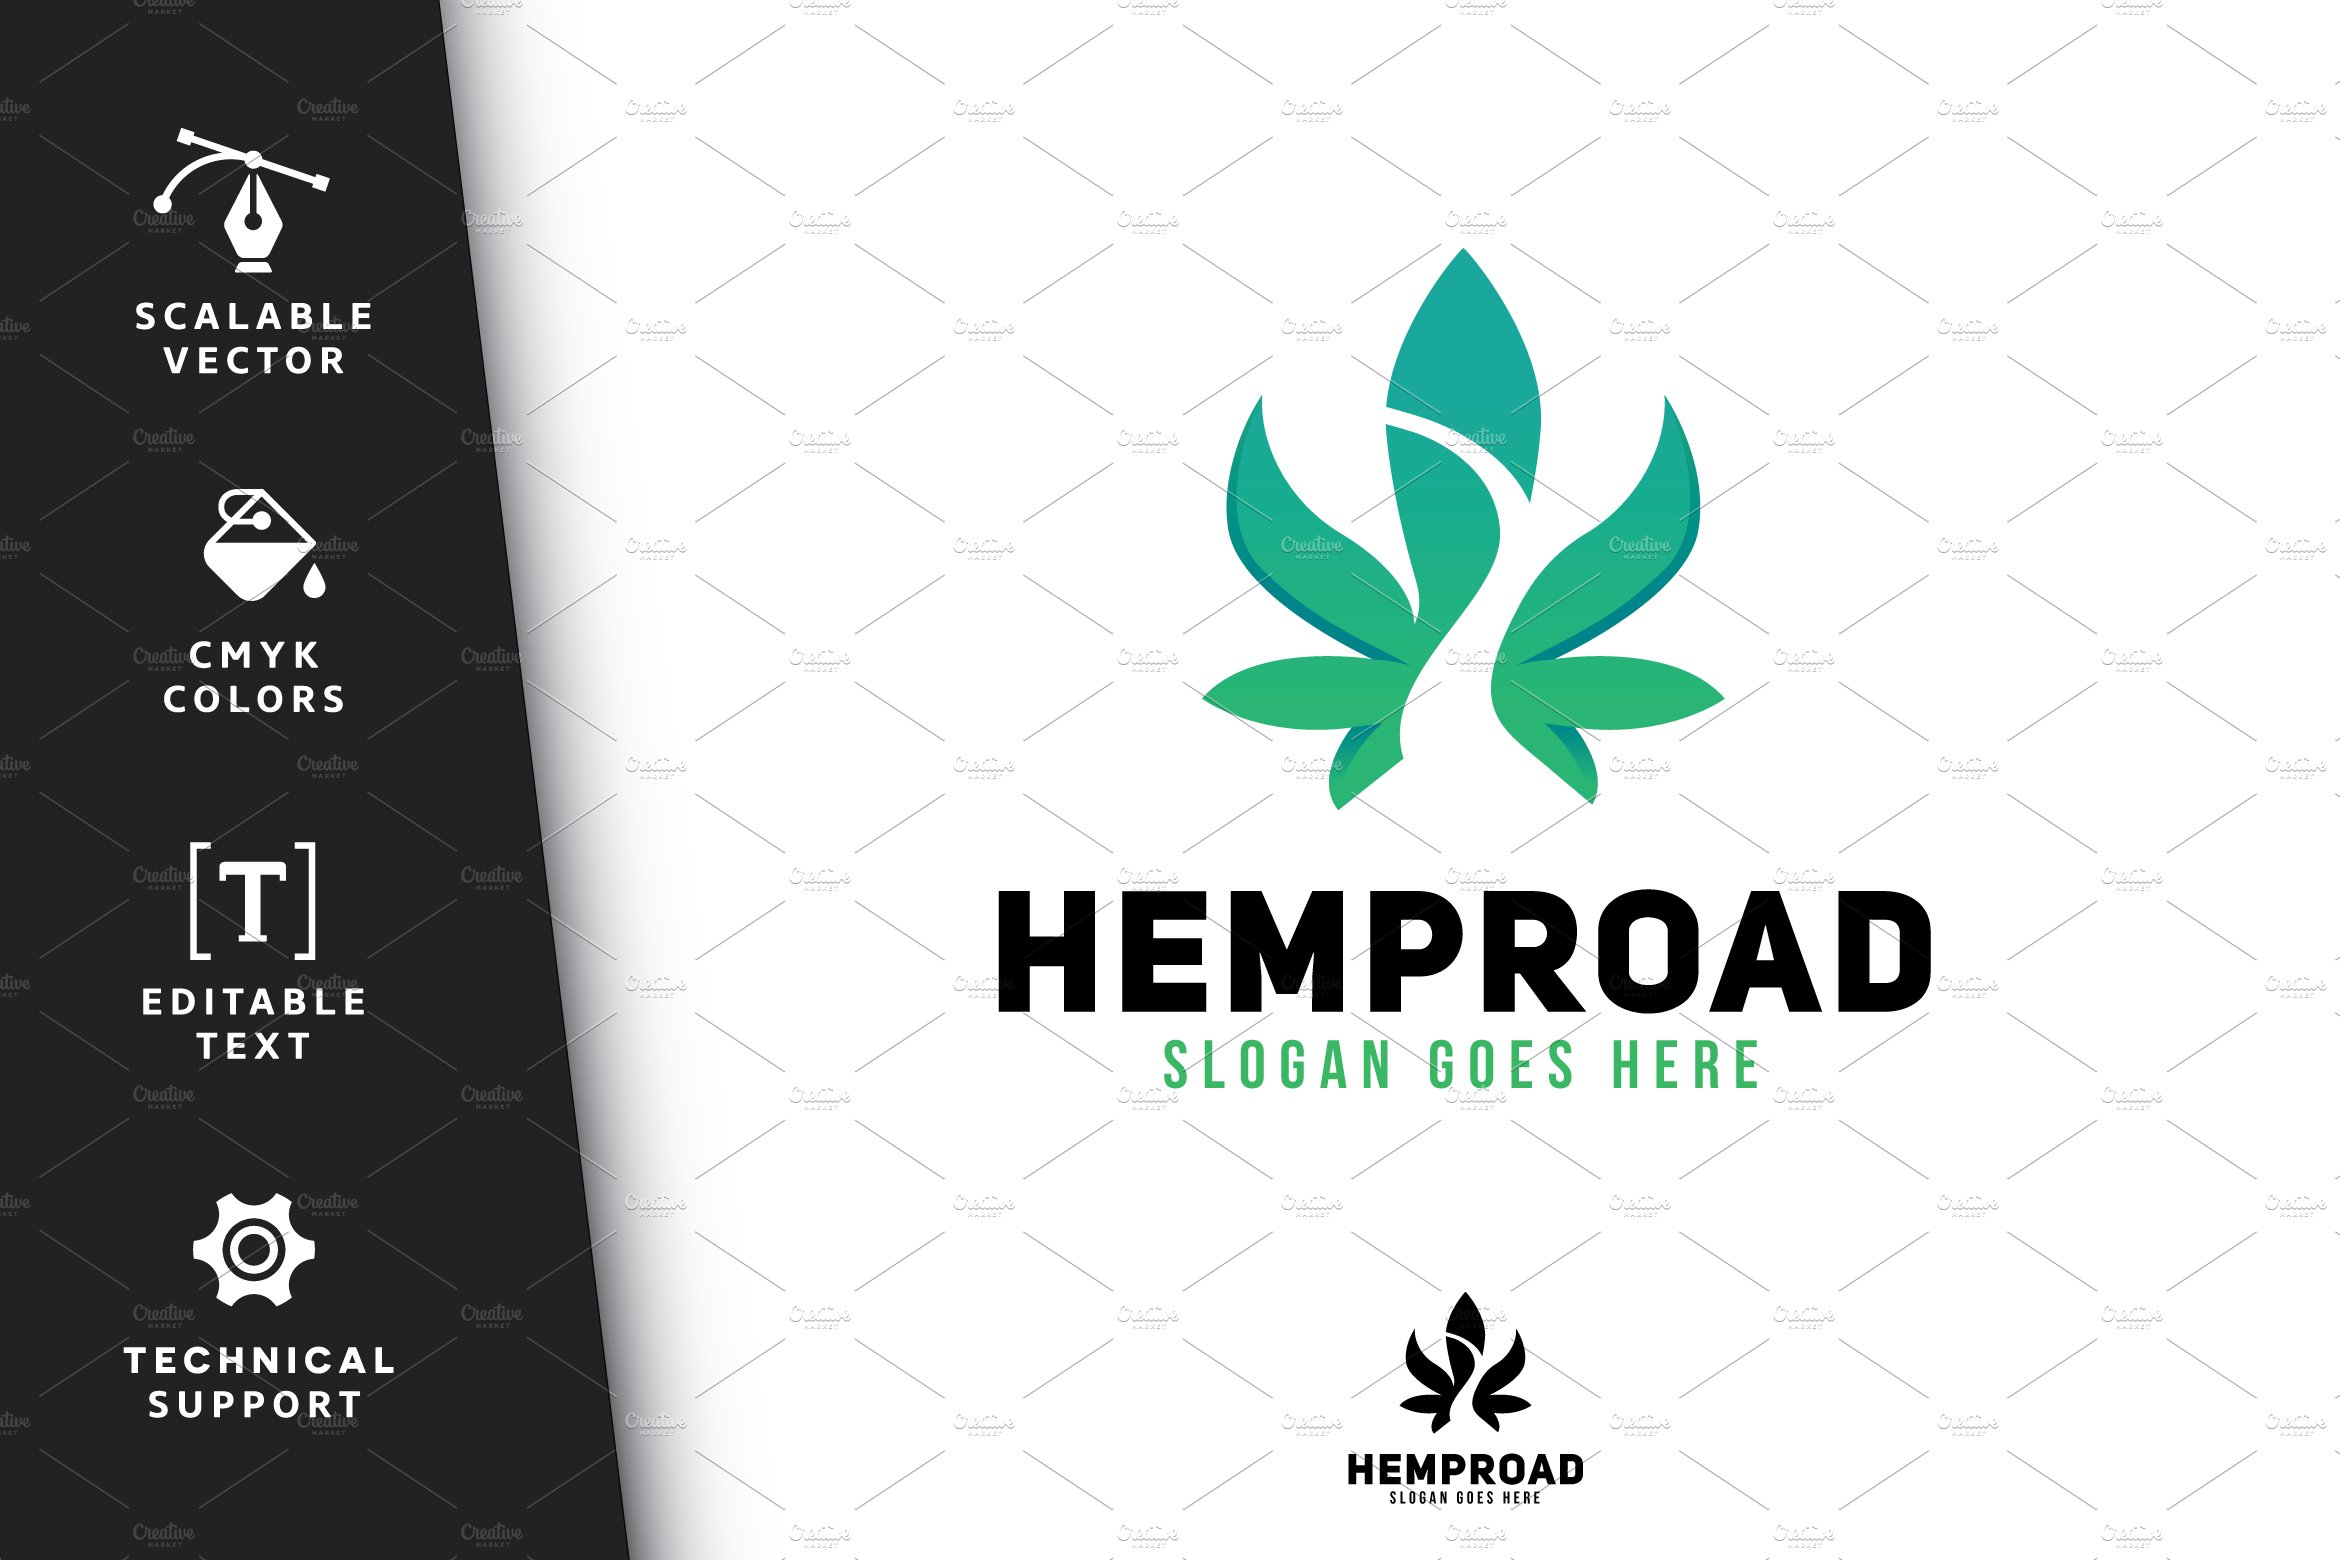 Hemproad Logo cover image.